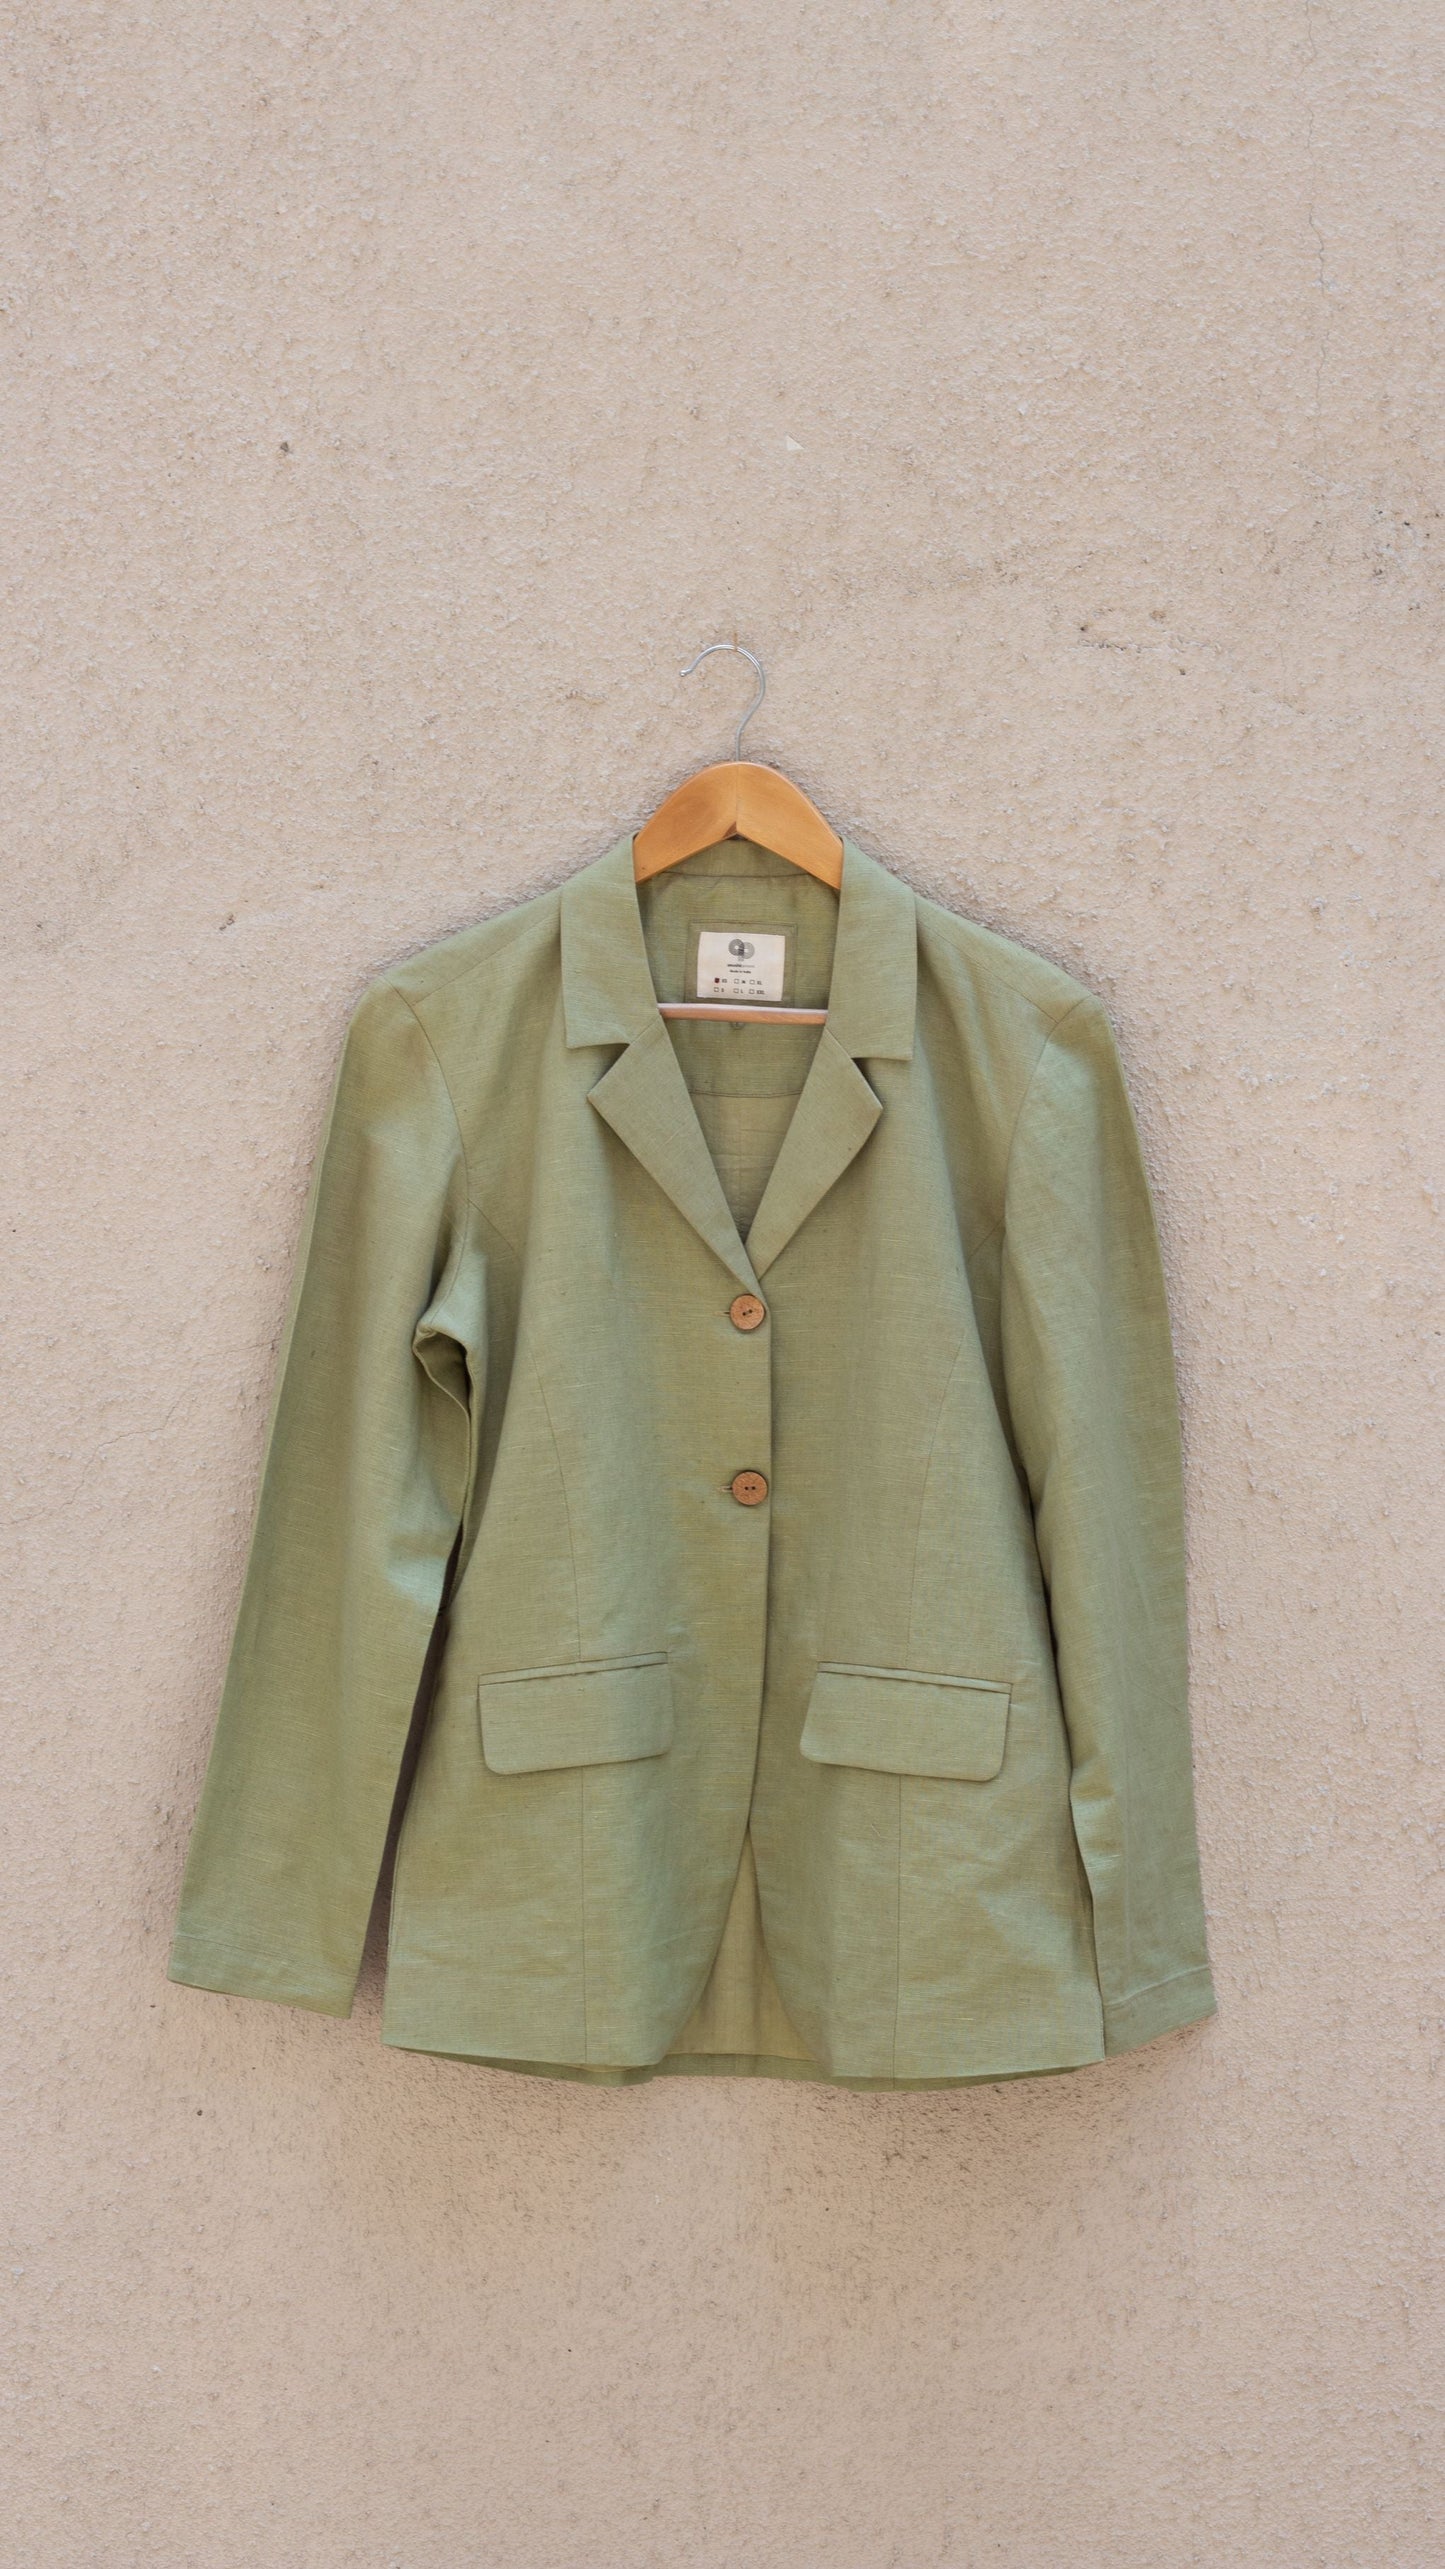 Green Cotton Blazer at Kamakhyaa by Anushé Pirani. This item is Blazers, Casual Wear, Cotton, Cotton Hemp, Green, Handwoven, Hemp, Shibumi Collection, Slim Fit, Solids, Womenswear